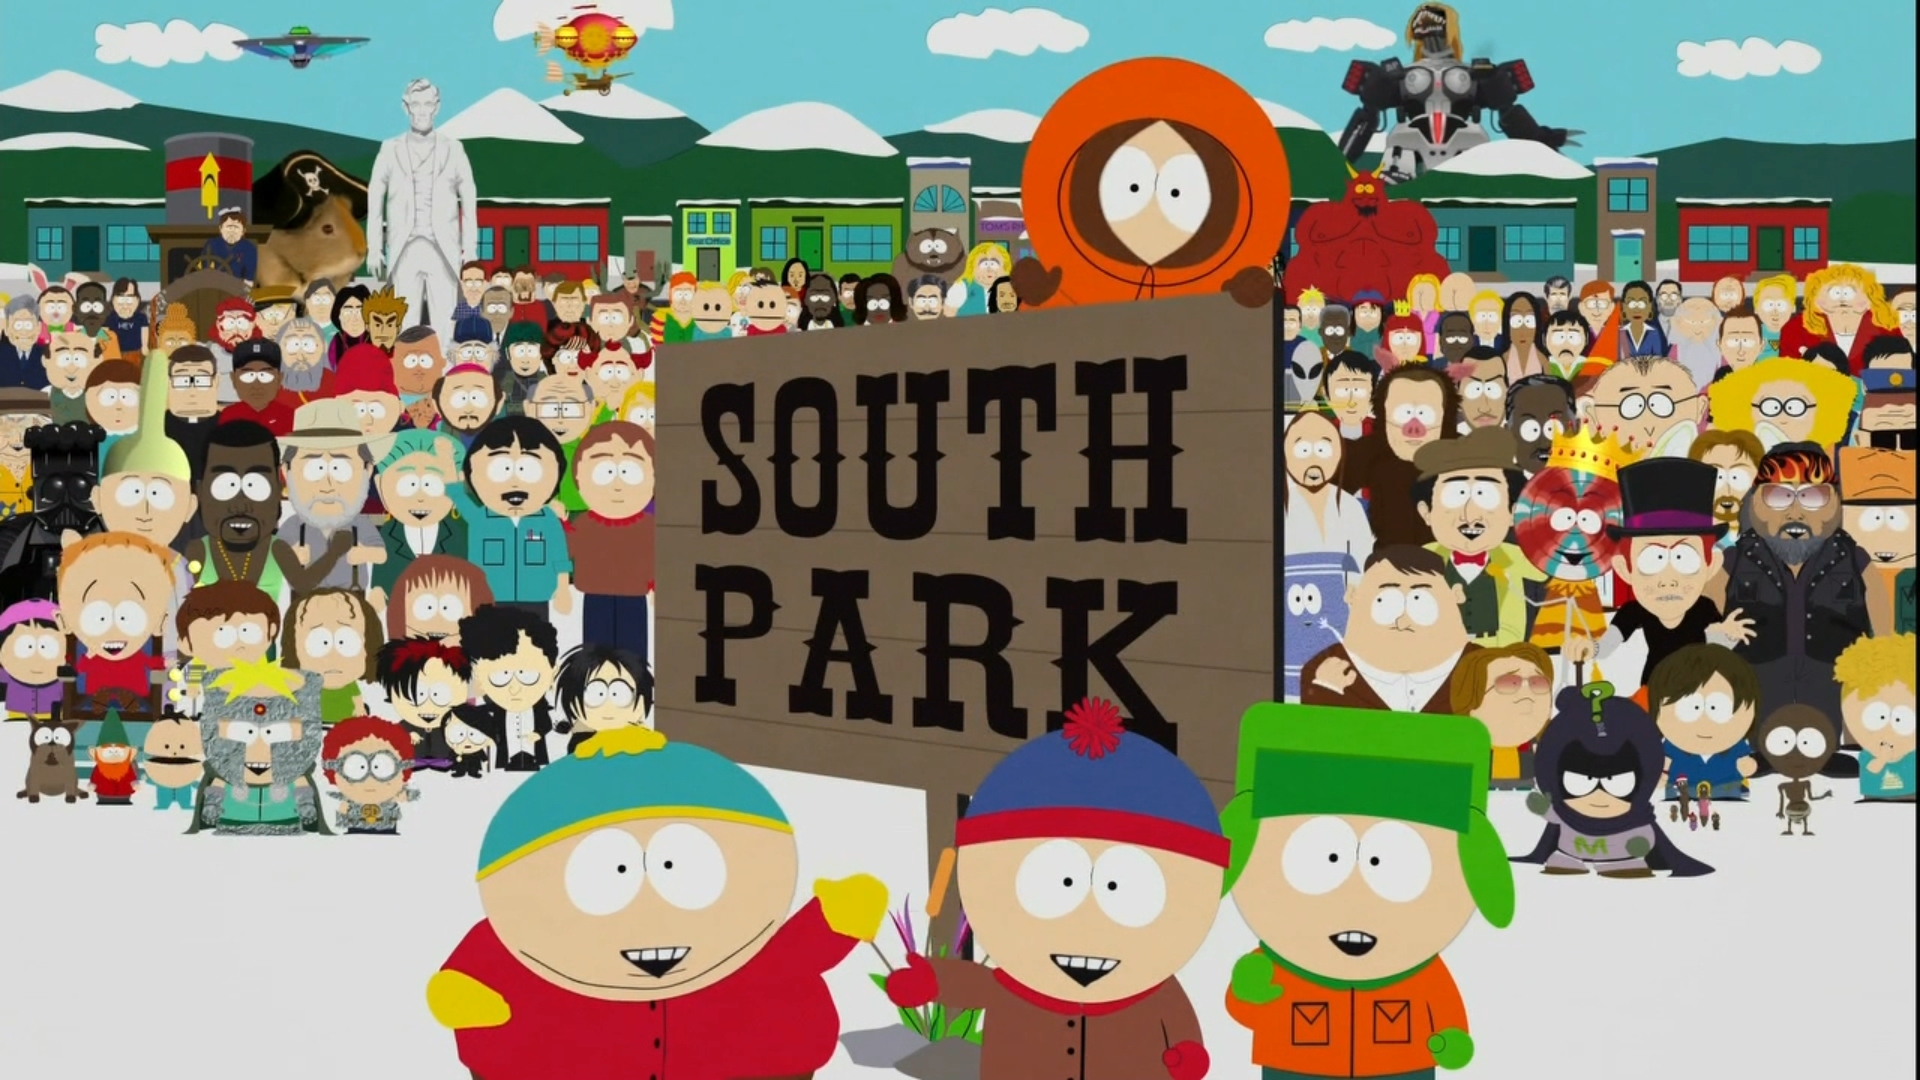 south, Park, Splash, Cartman, Kenny Wallpaper